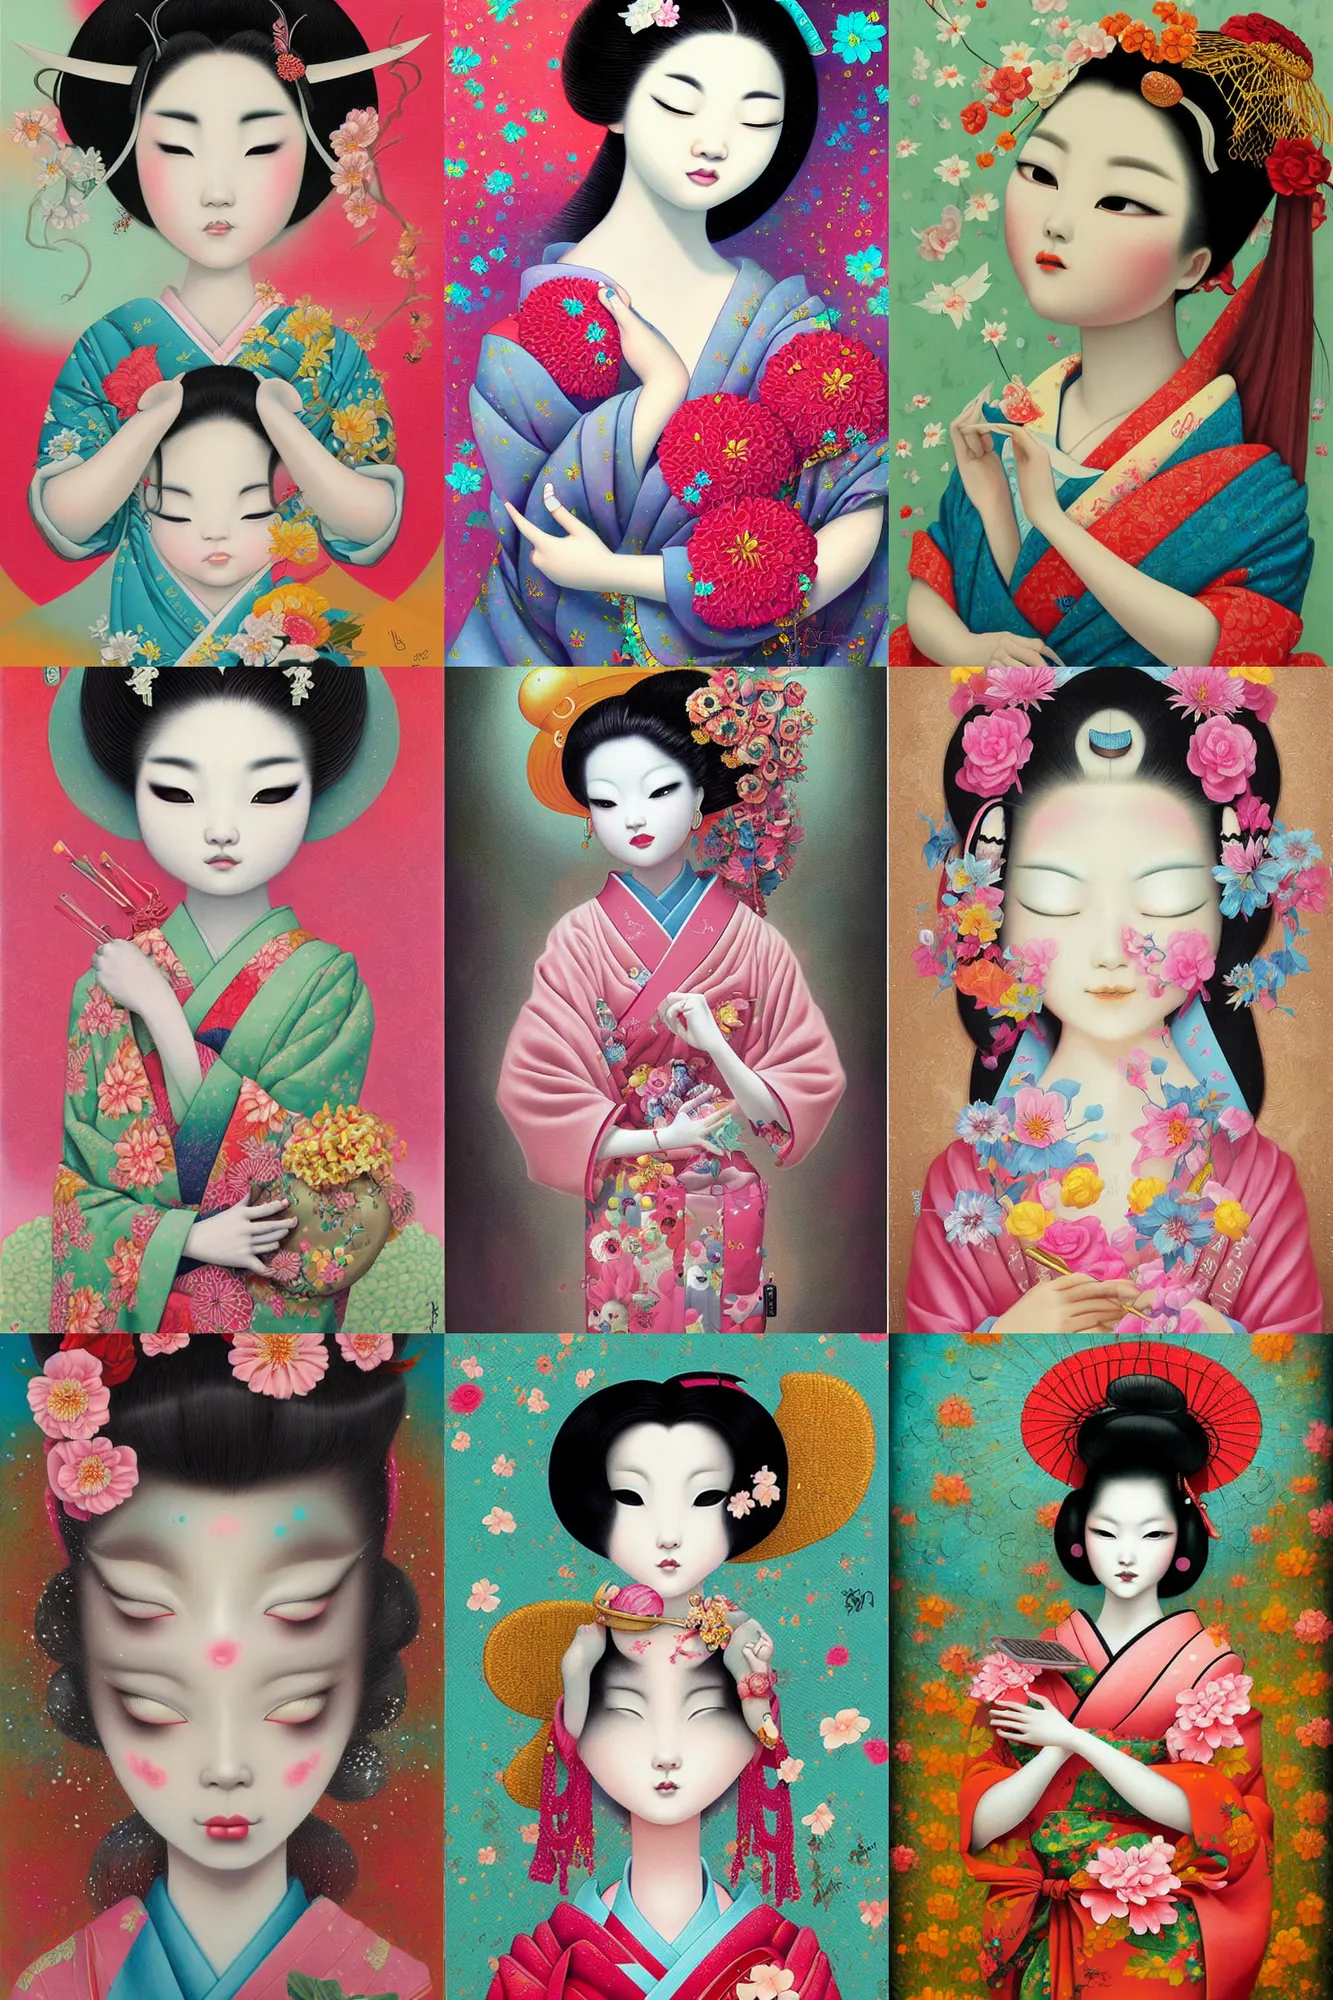 Prompt: digit painting of a geisha goddess by amy sol hikari shimoda, mark ryden